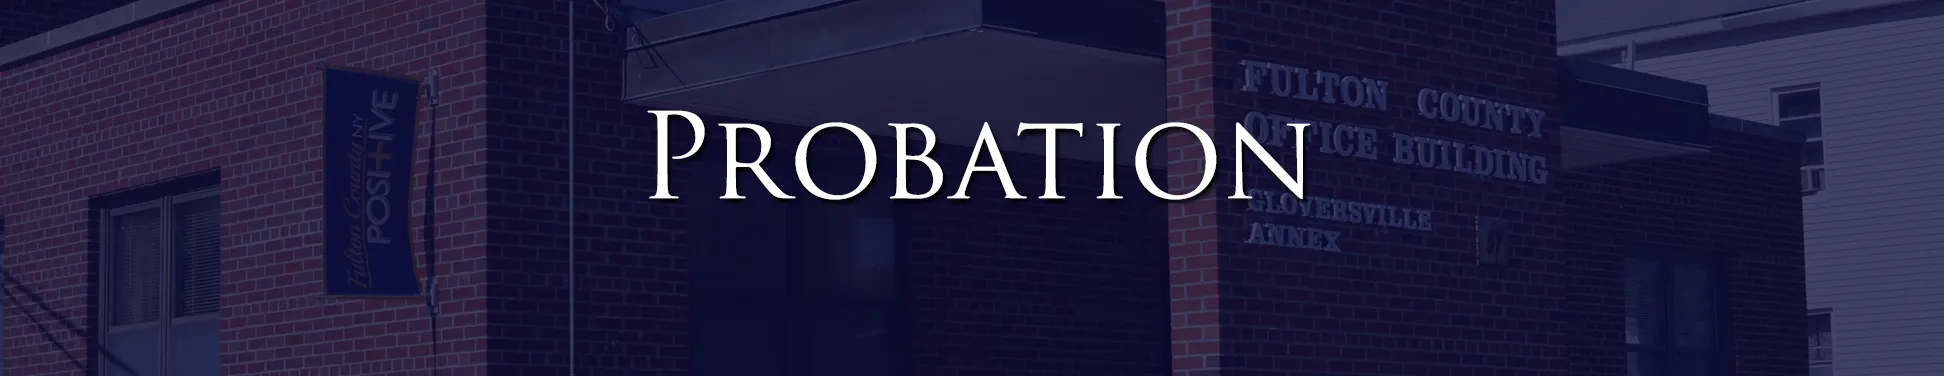 Probation Department